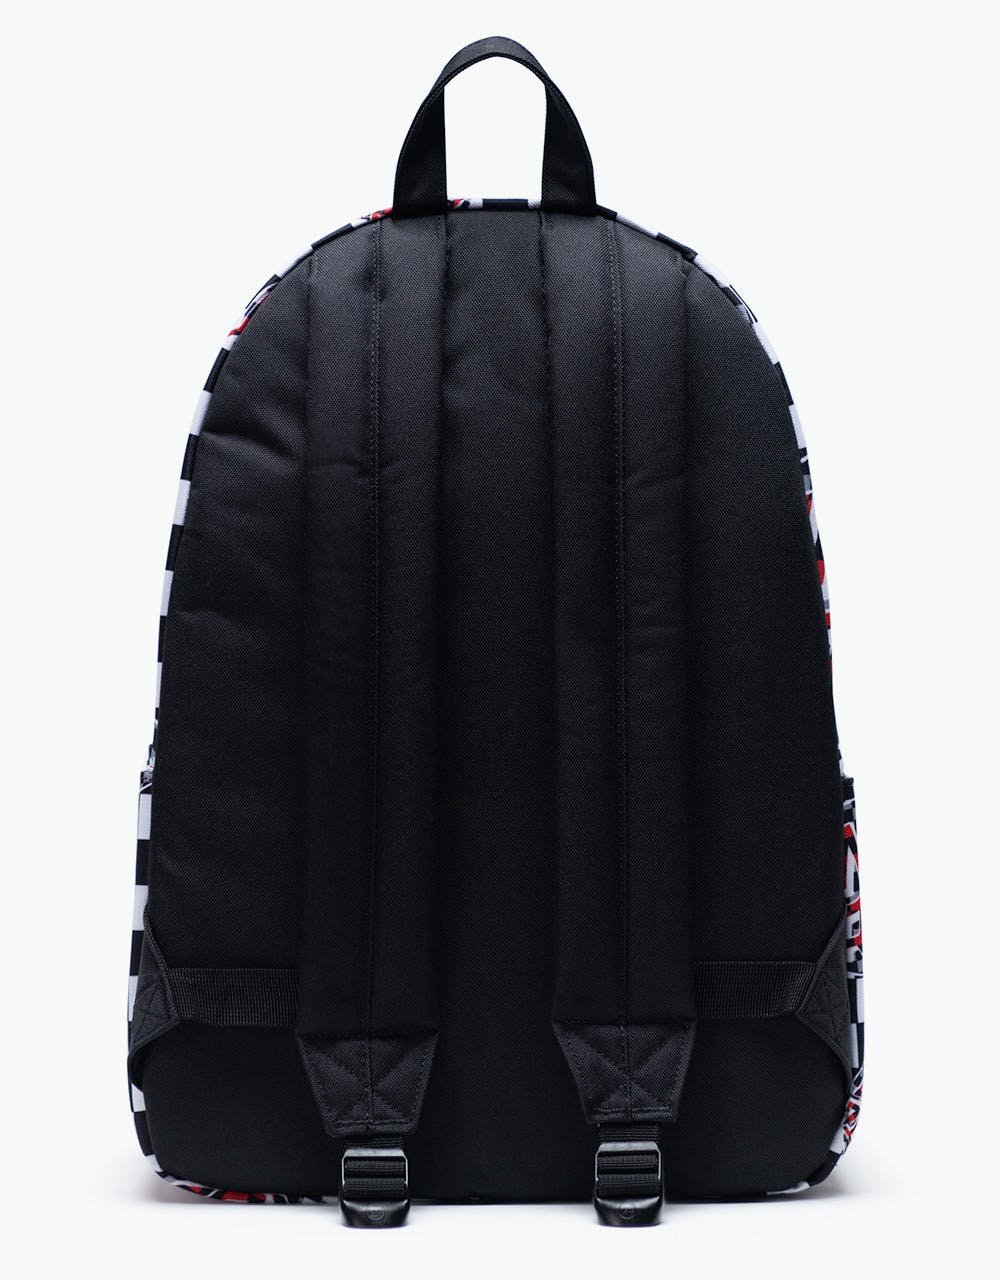 Herschel Supply Co. x Santa Cruz Classic X-Large Backpack - Dotcheck/Black